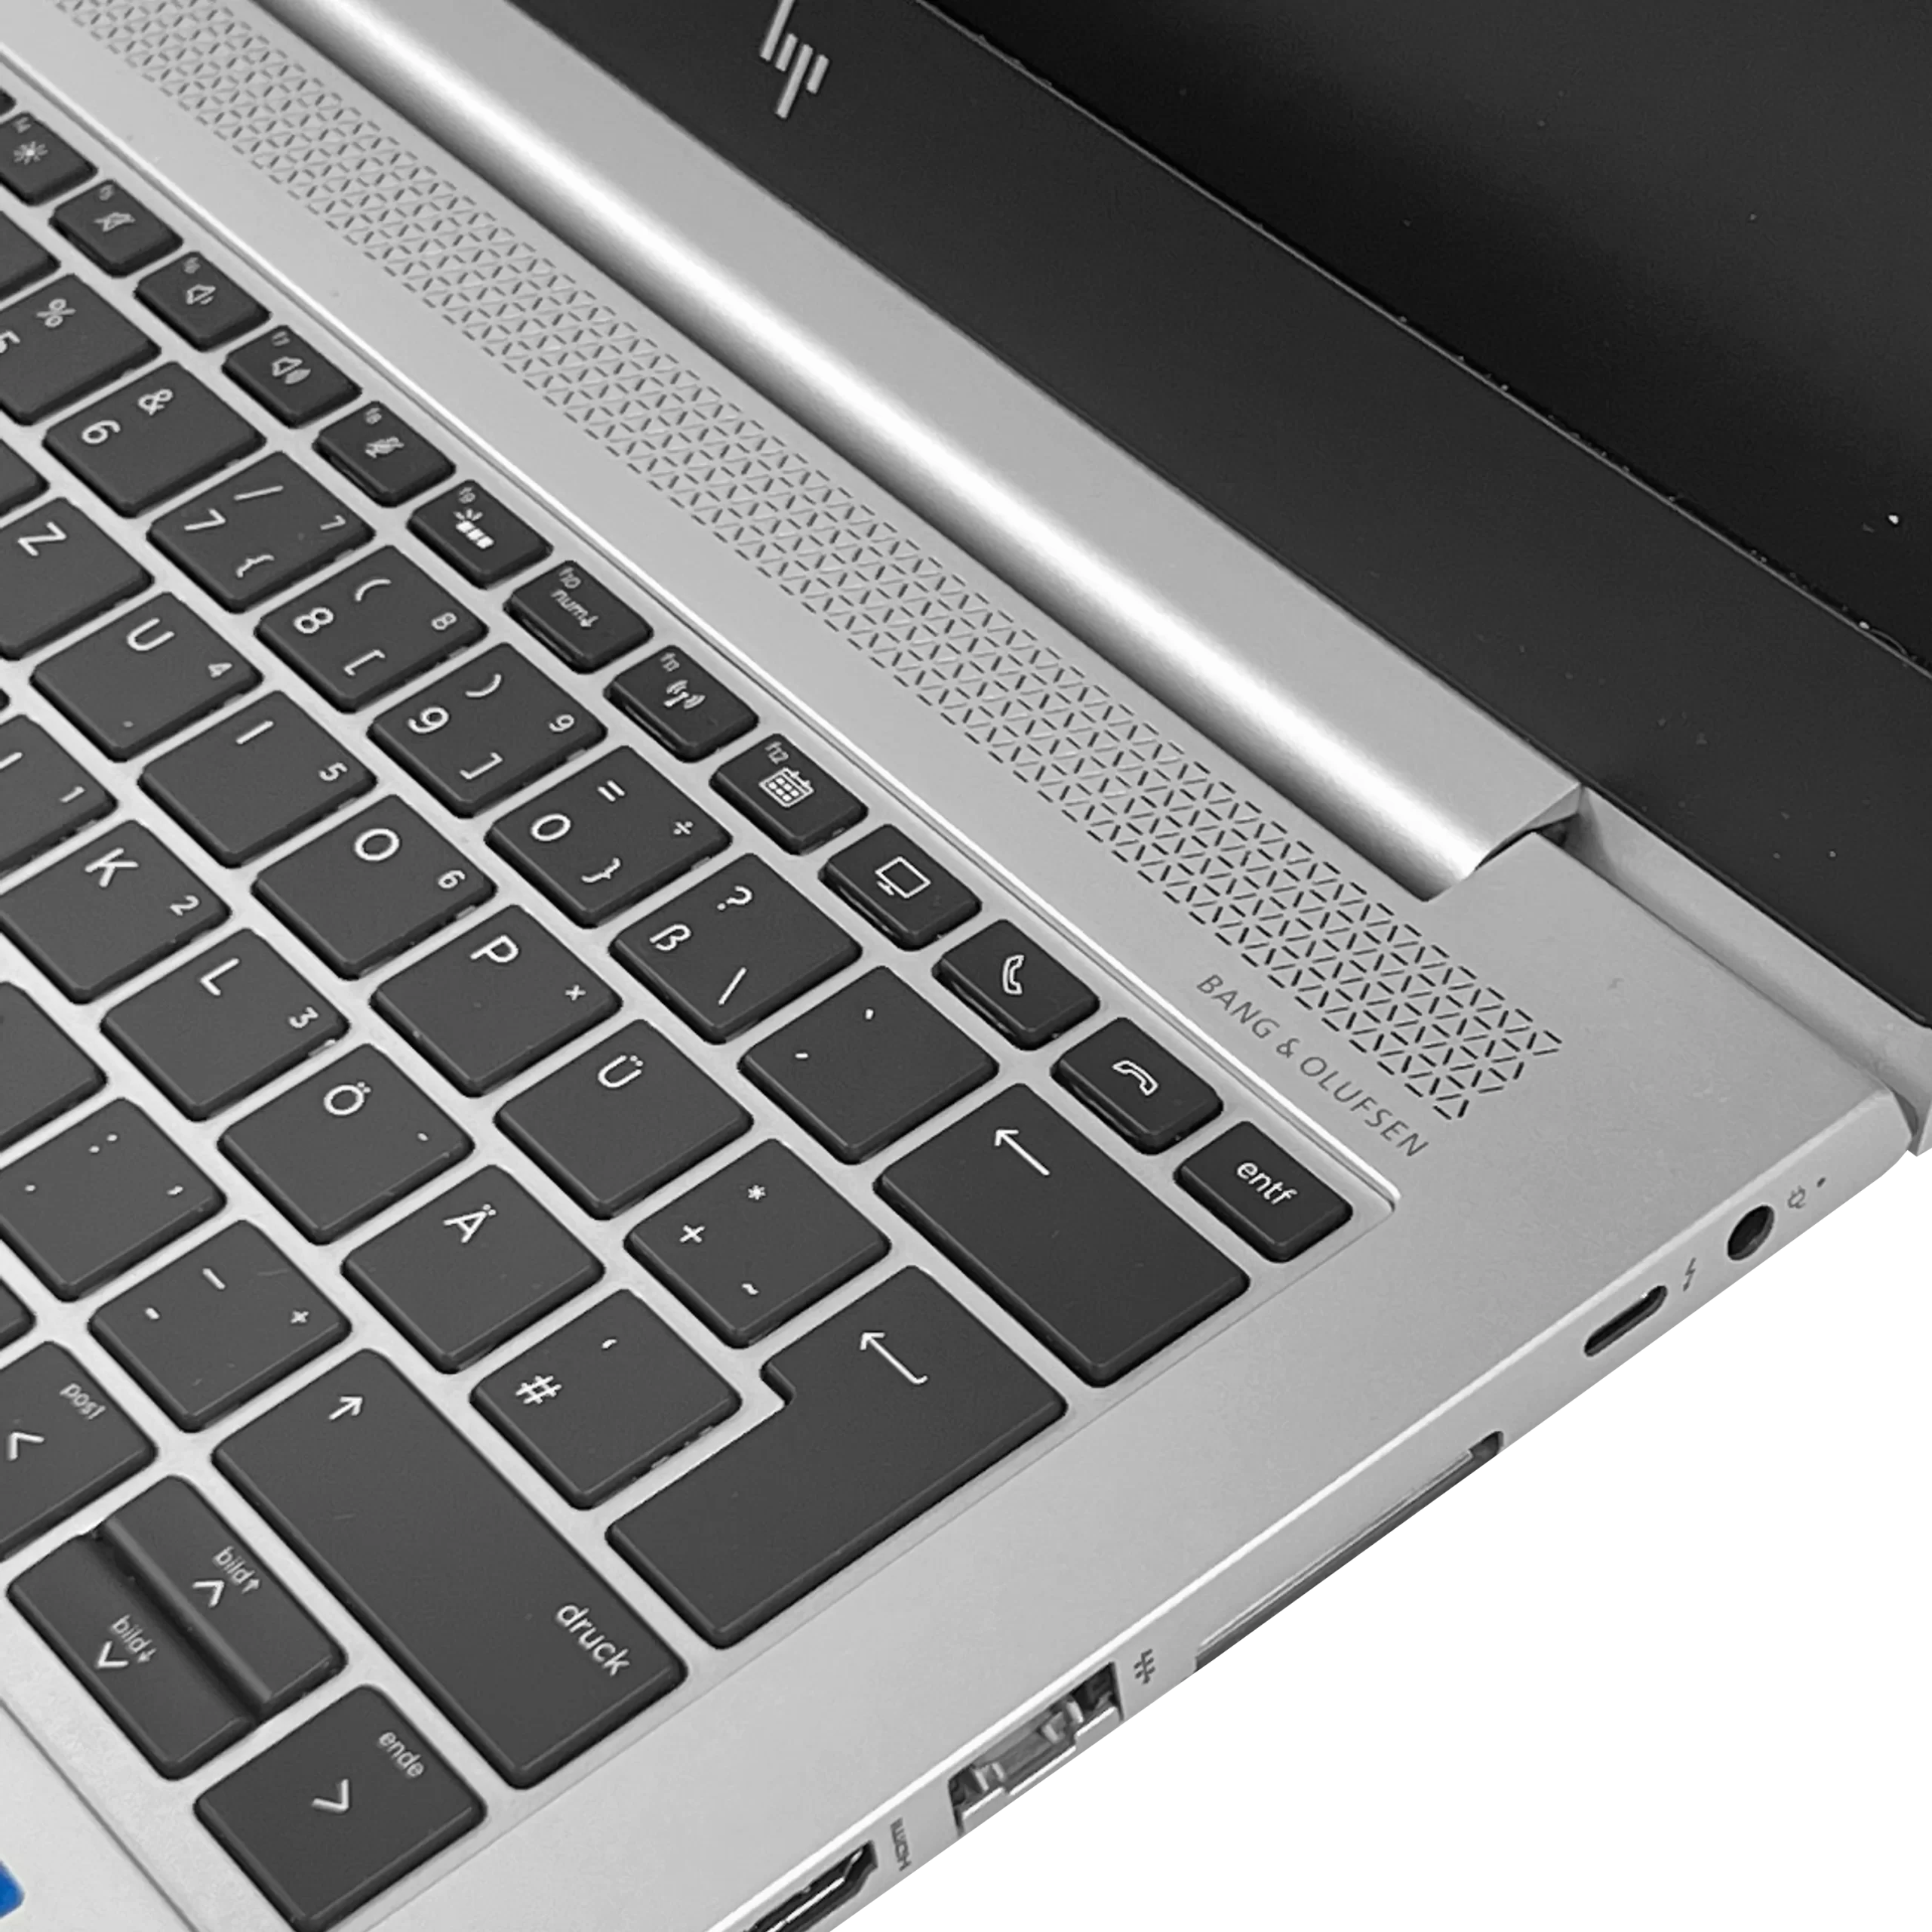 HP EliteBook 840 G5 Core i5-8350u 1.7GHz 32GB 256GB SSD FHD Webcam Win 10  Laptop